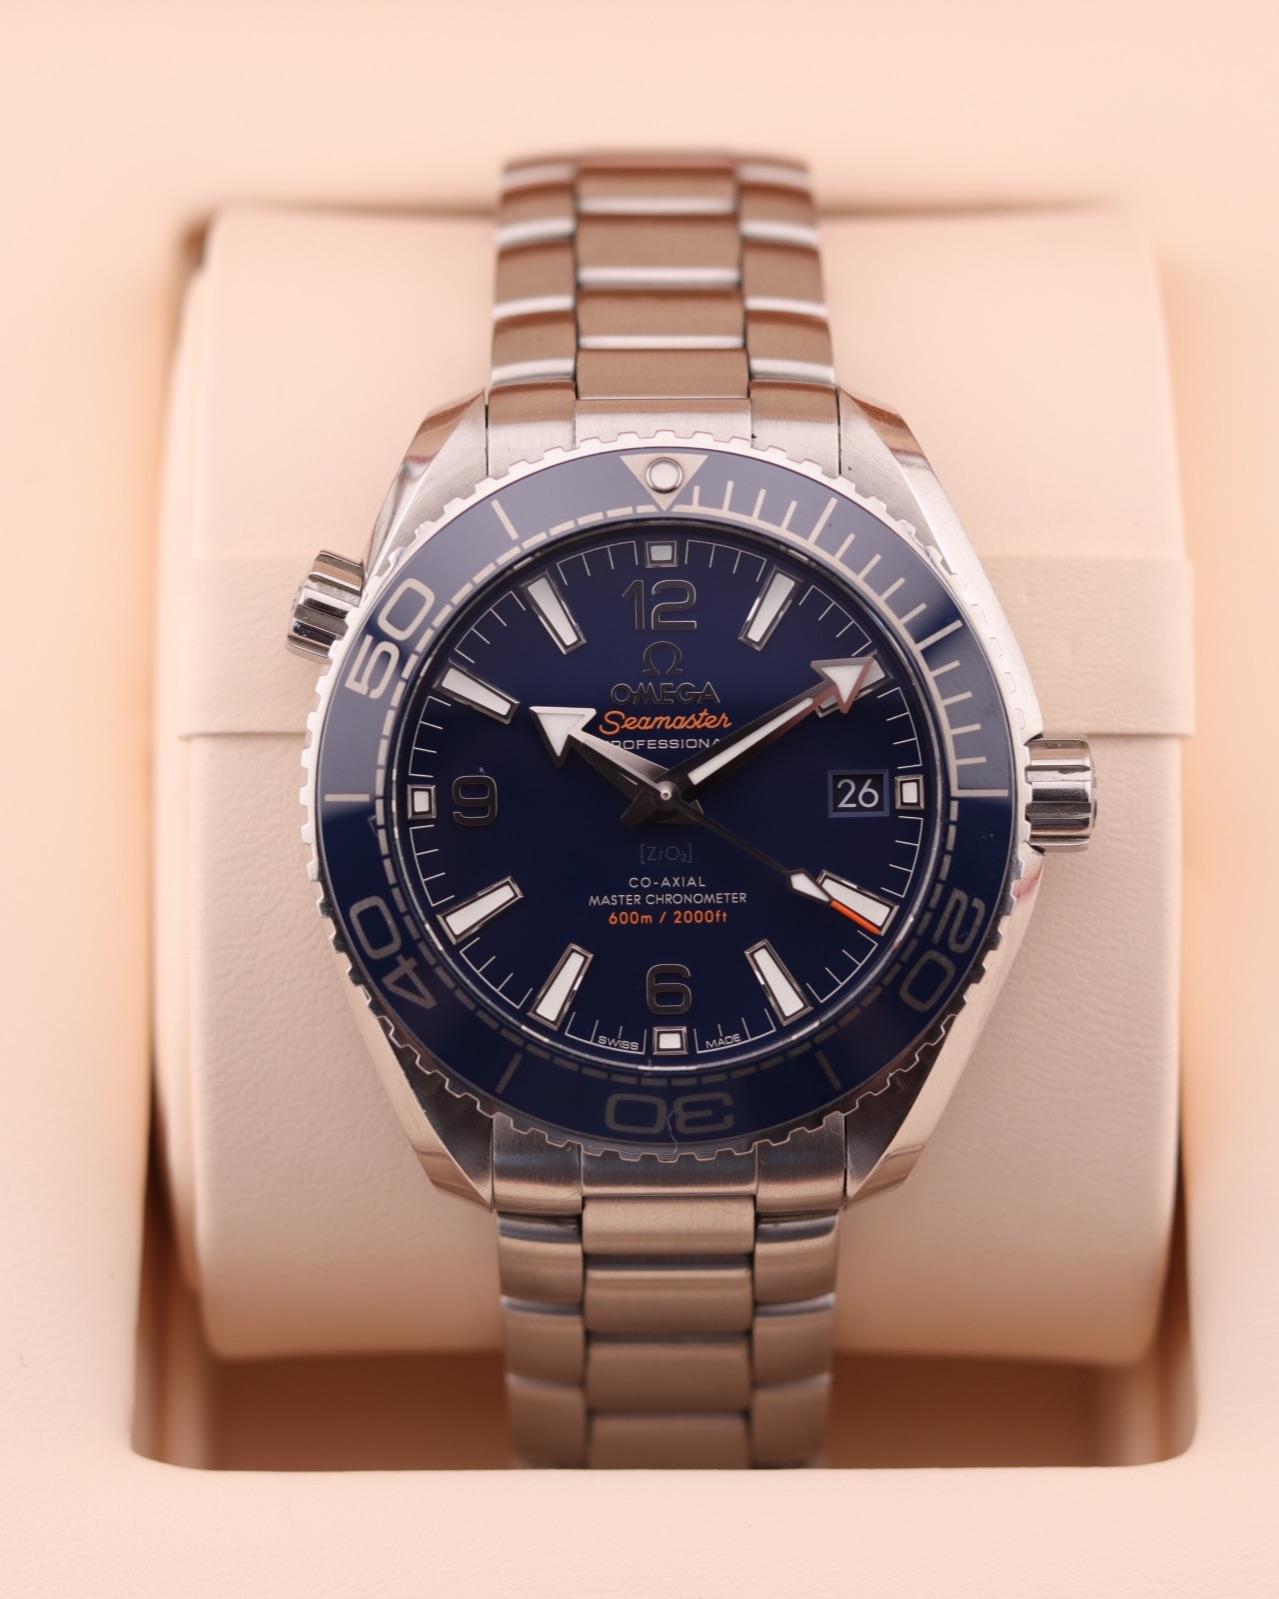 Planet Ocean 600M Seamaster steel Chronometer Watch 215.30.40.20.03.001